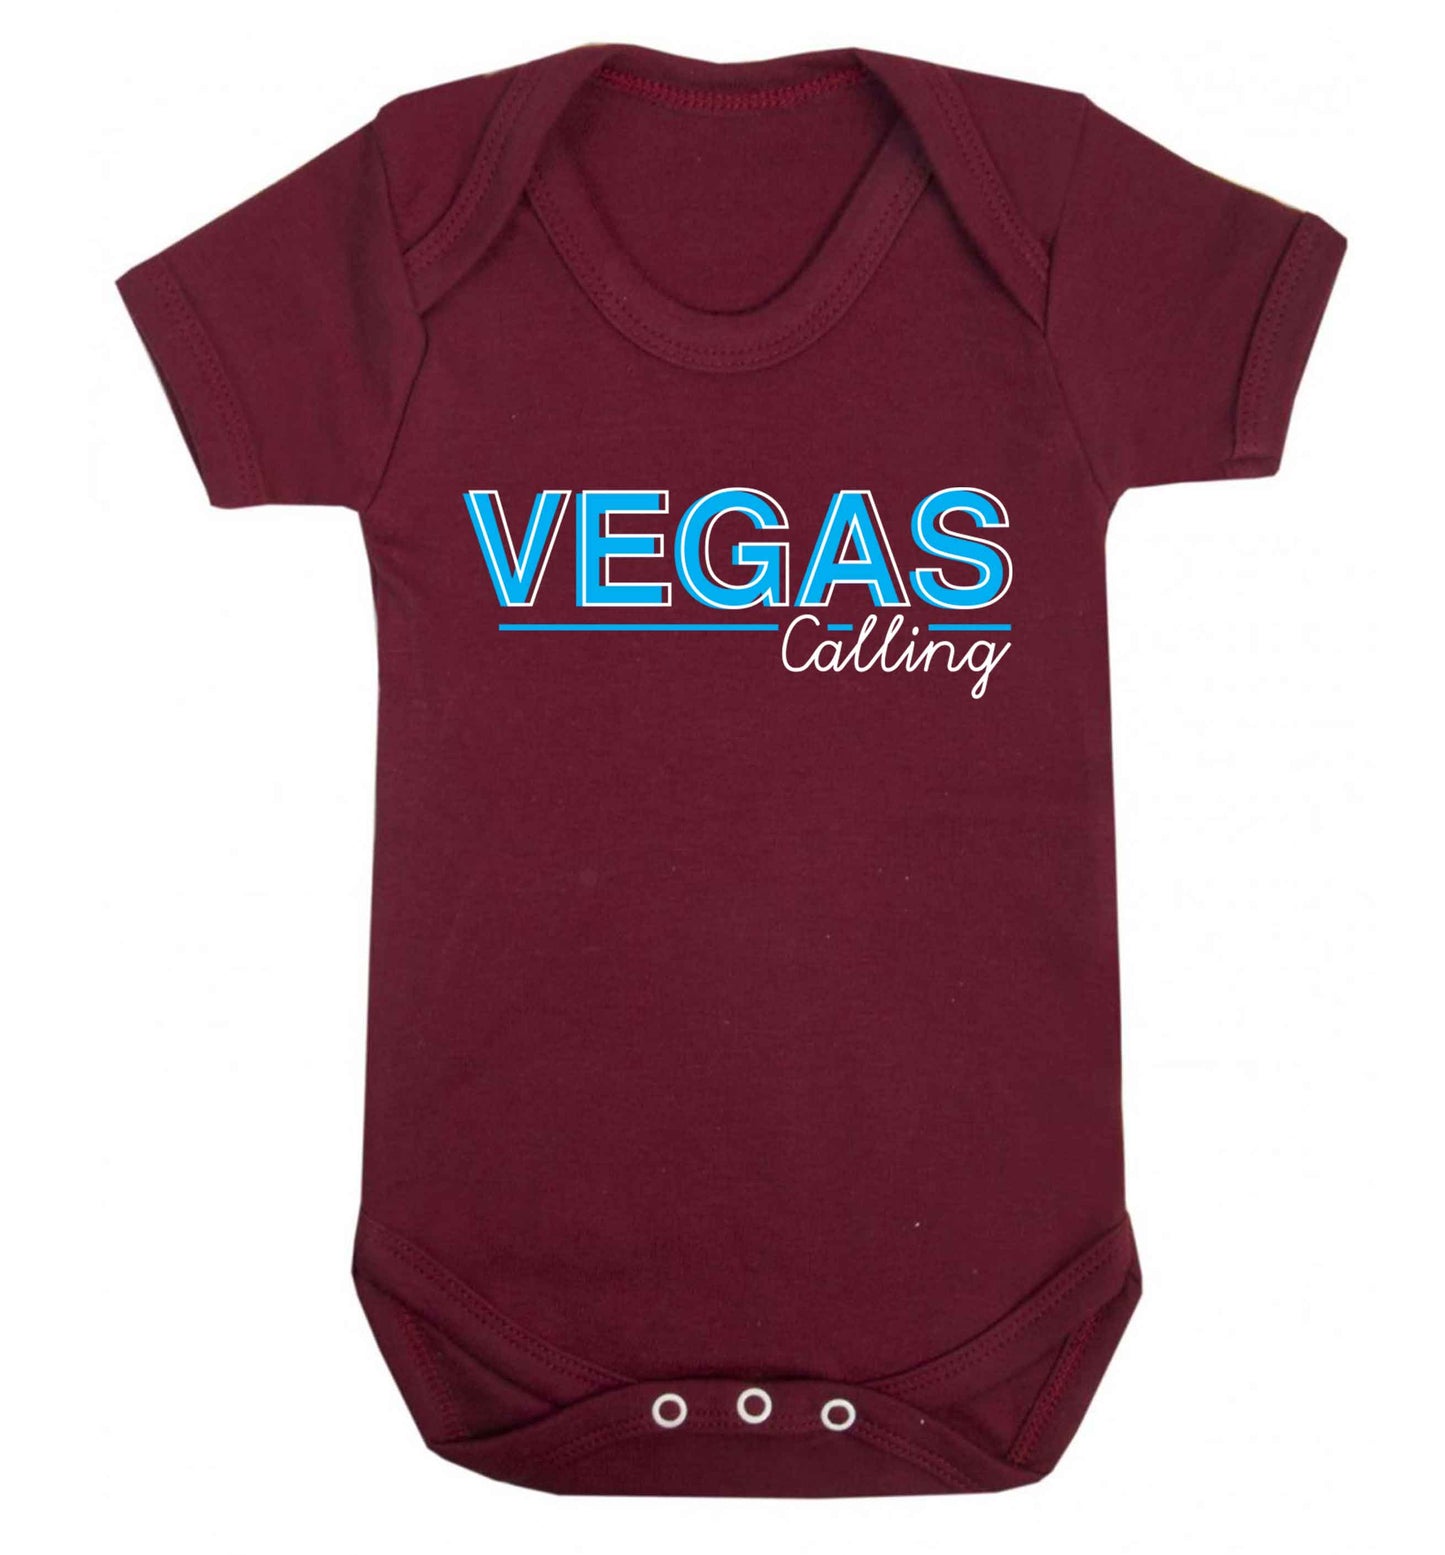 Vegas calling Baby Vest maroon 18-24 months